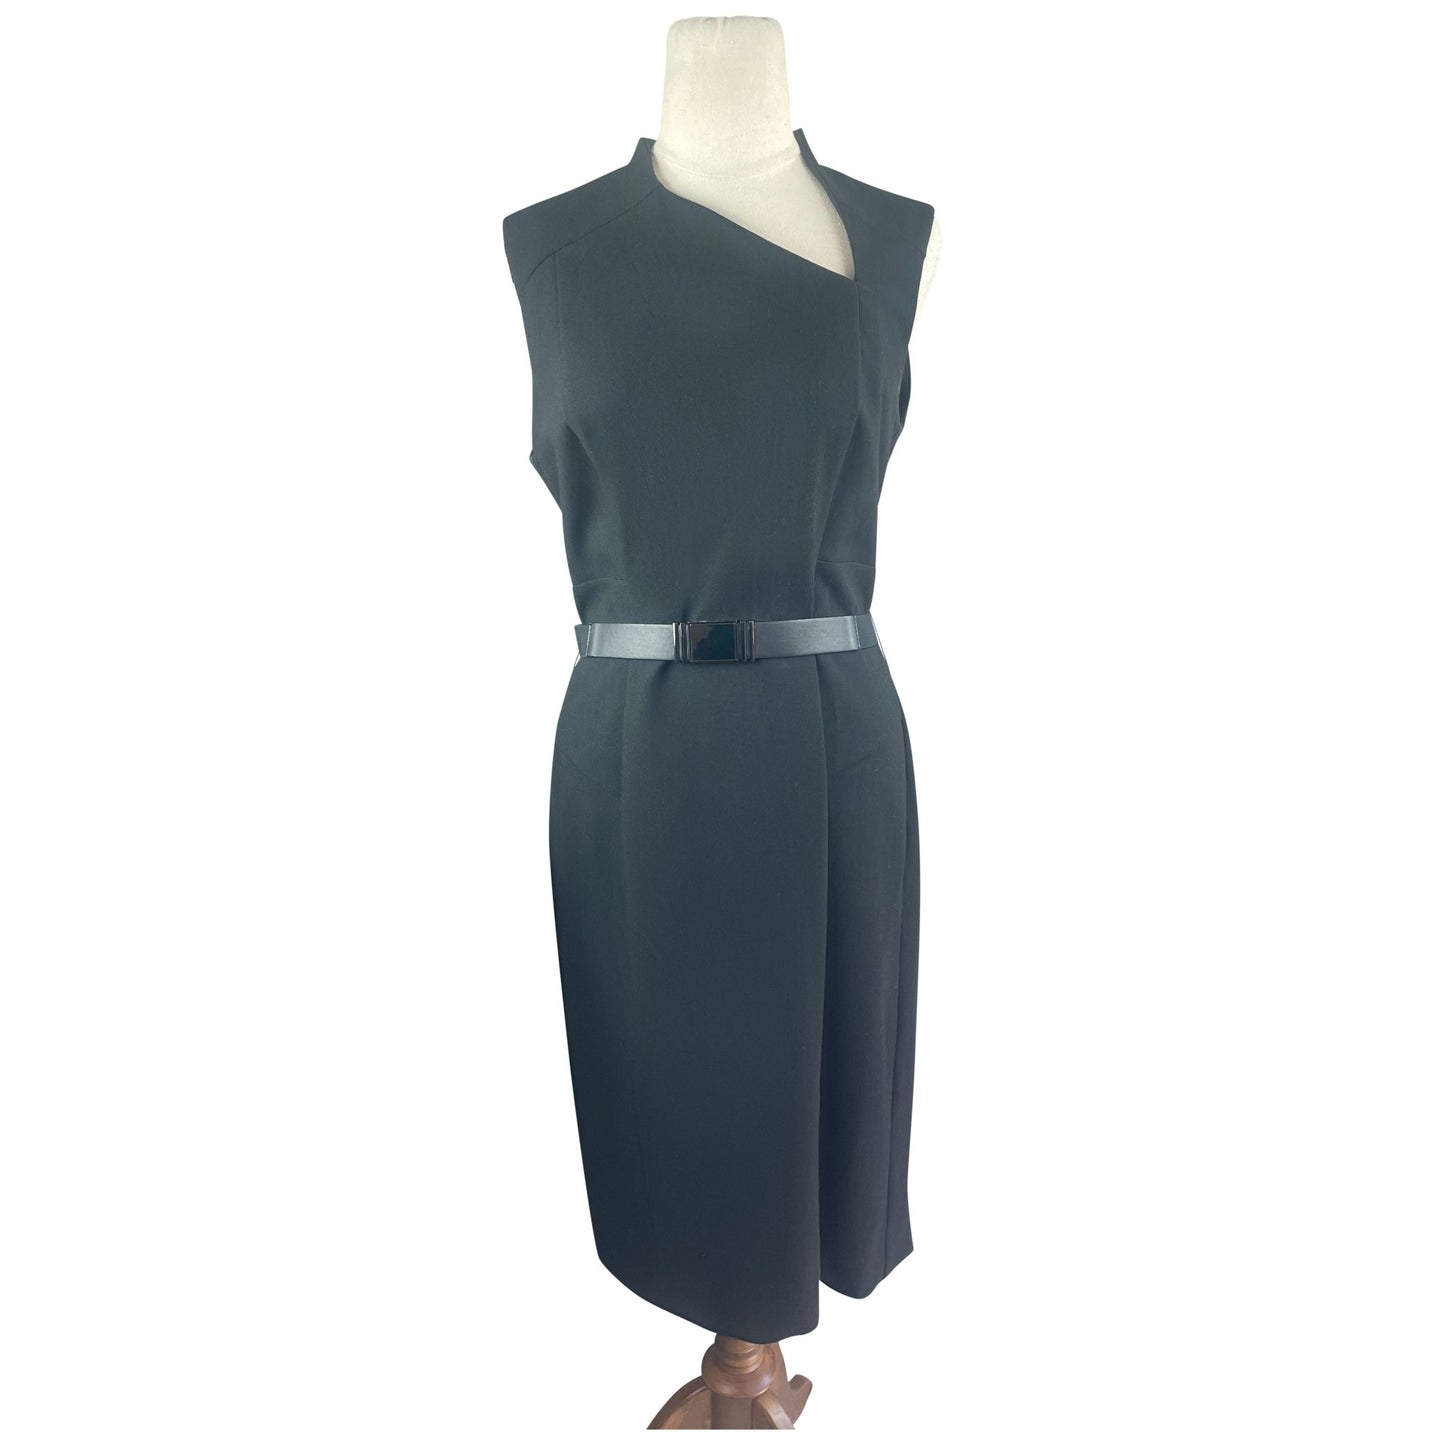 Cue black fitted dress w asymmetric neck line | size 12